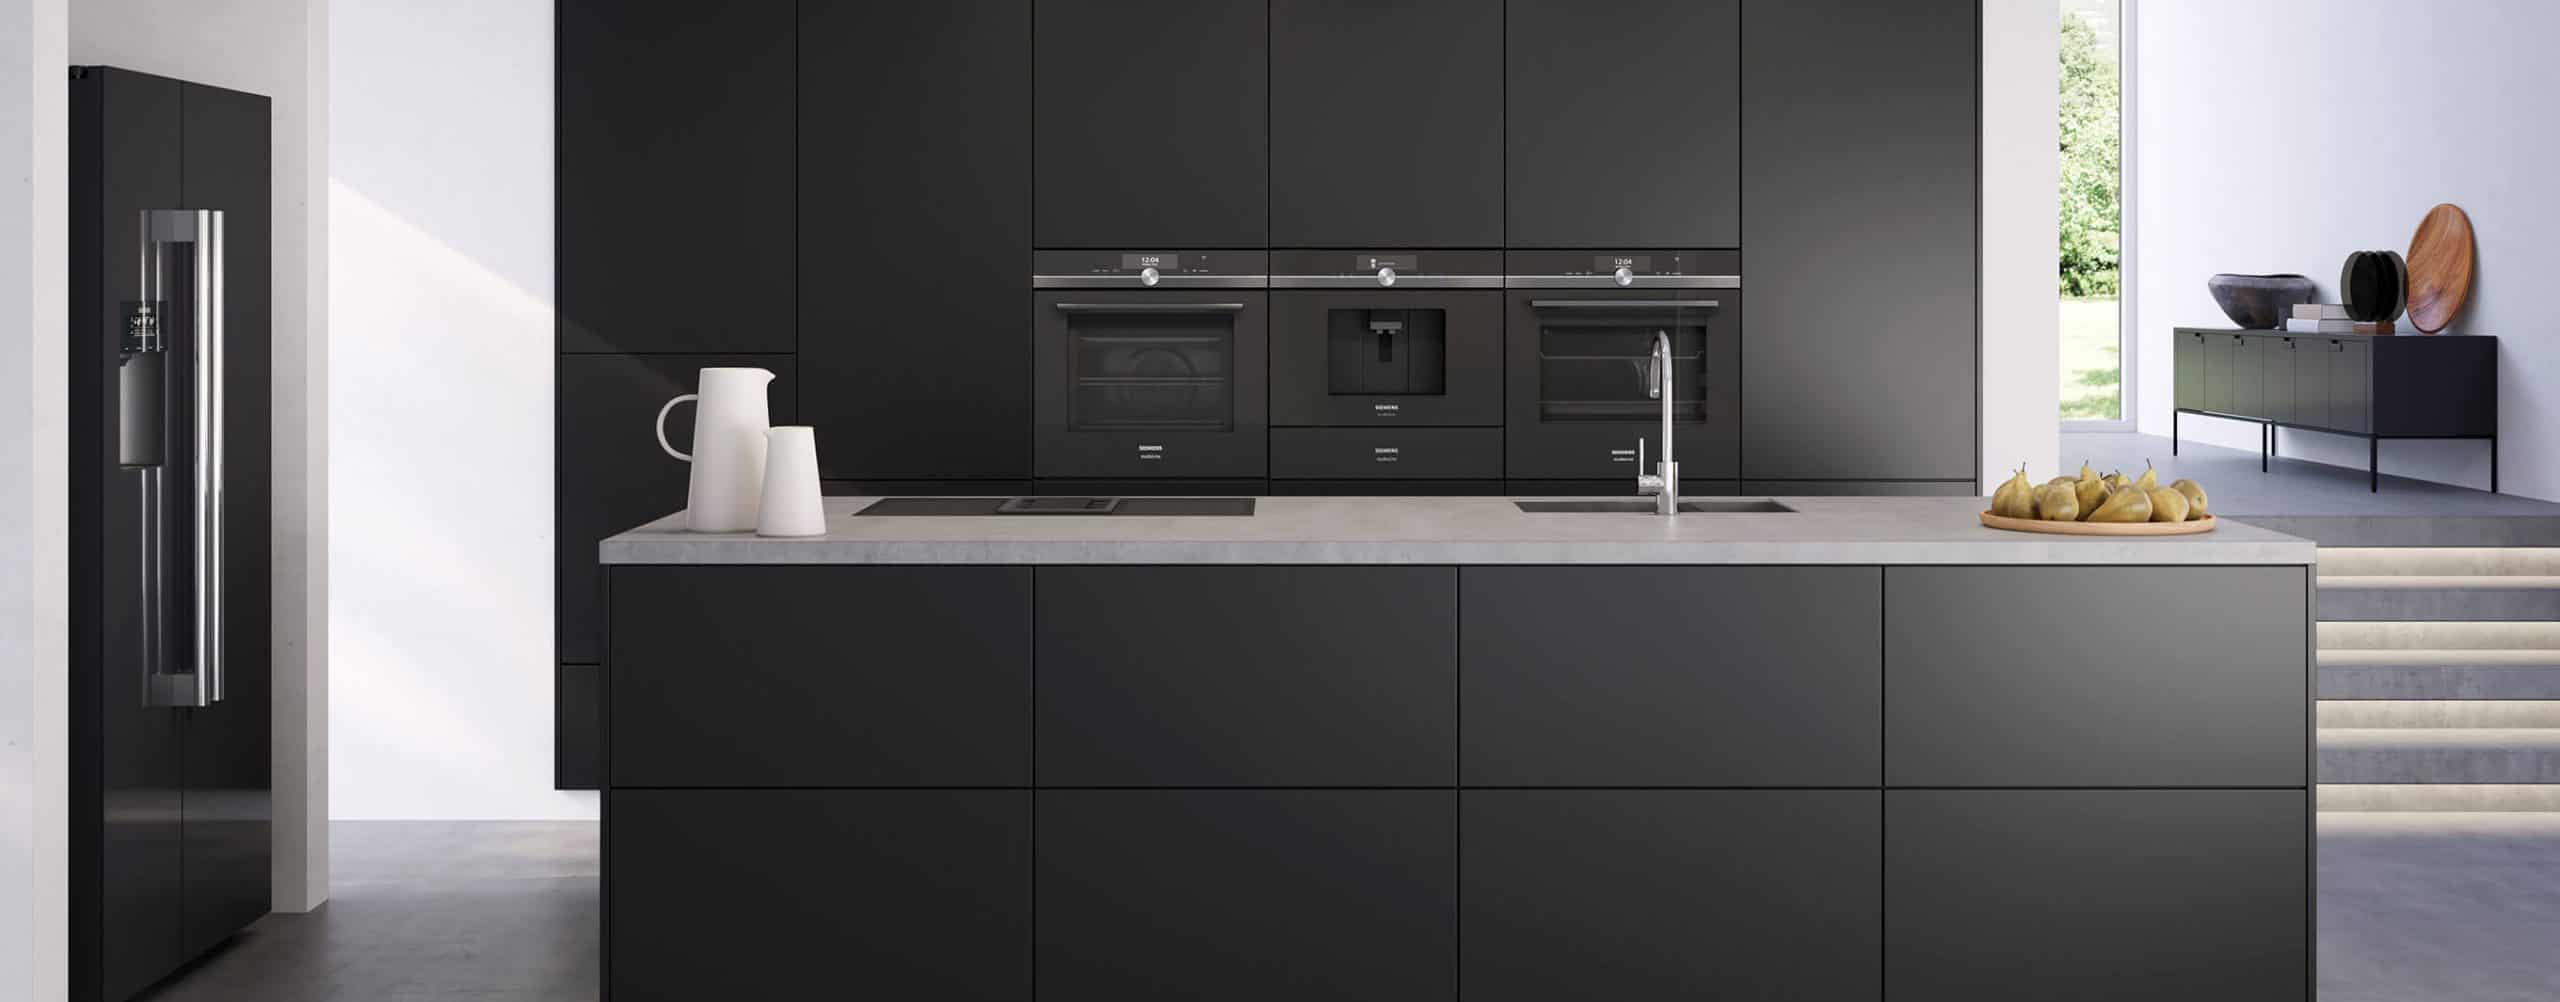 black modular kitchen with built in appliances, luxury kitchen with siemens appliances, built in oven, refrigerator